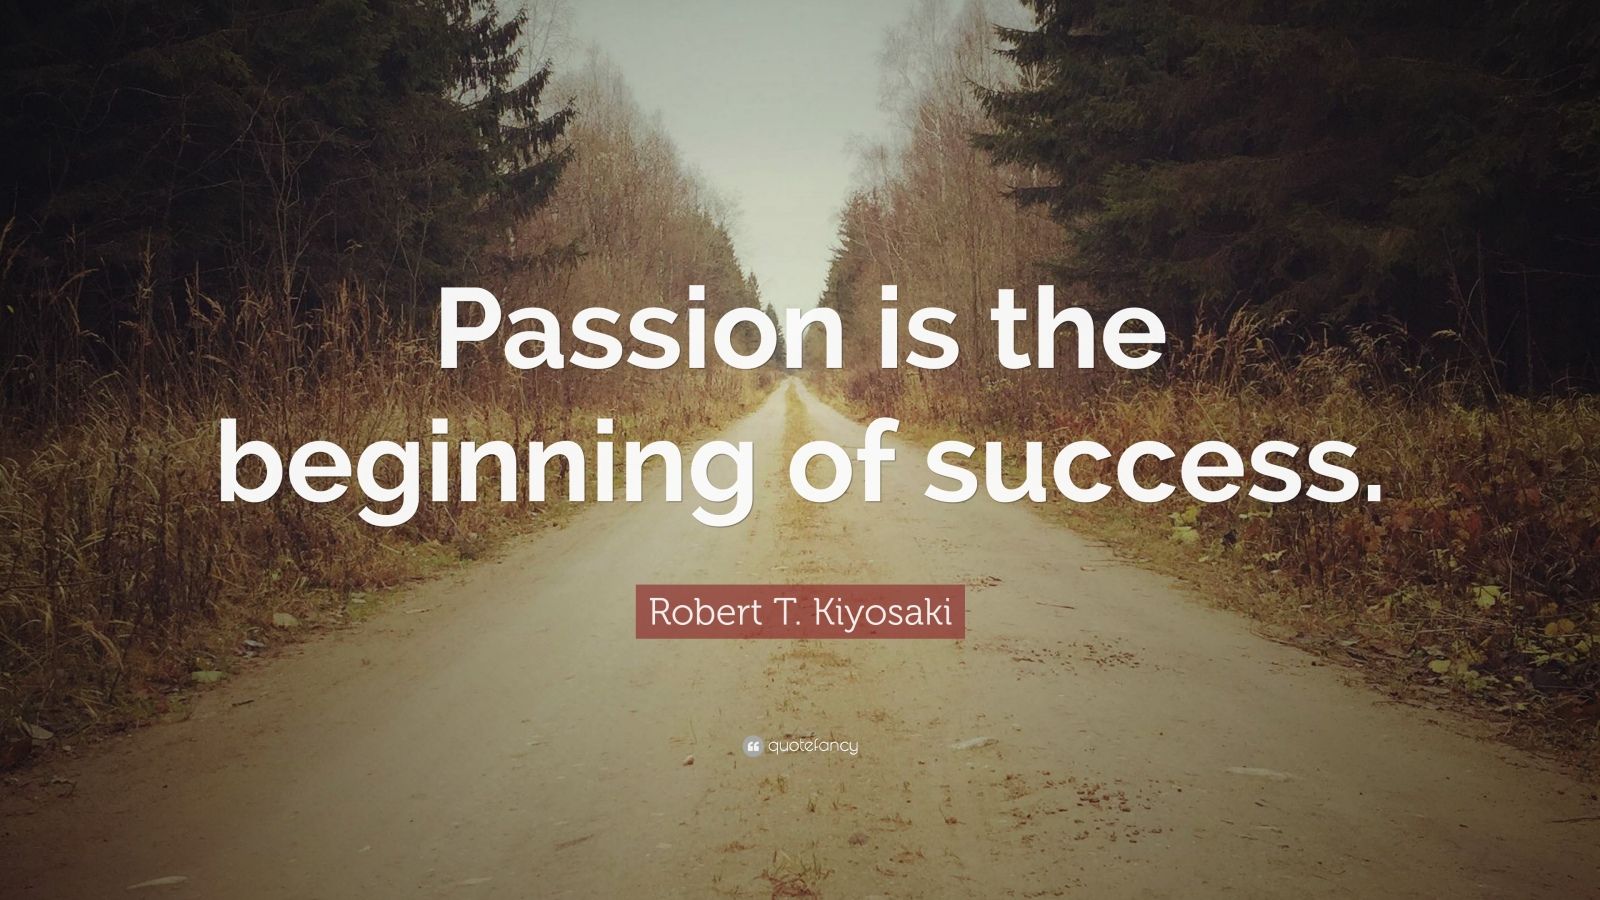 Robert T. Kiyosaki Quote: “Passion is the beginning of success.”